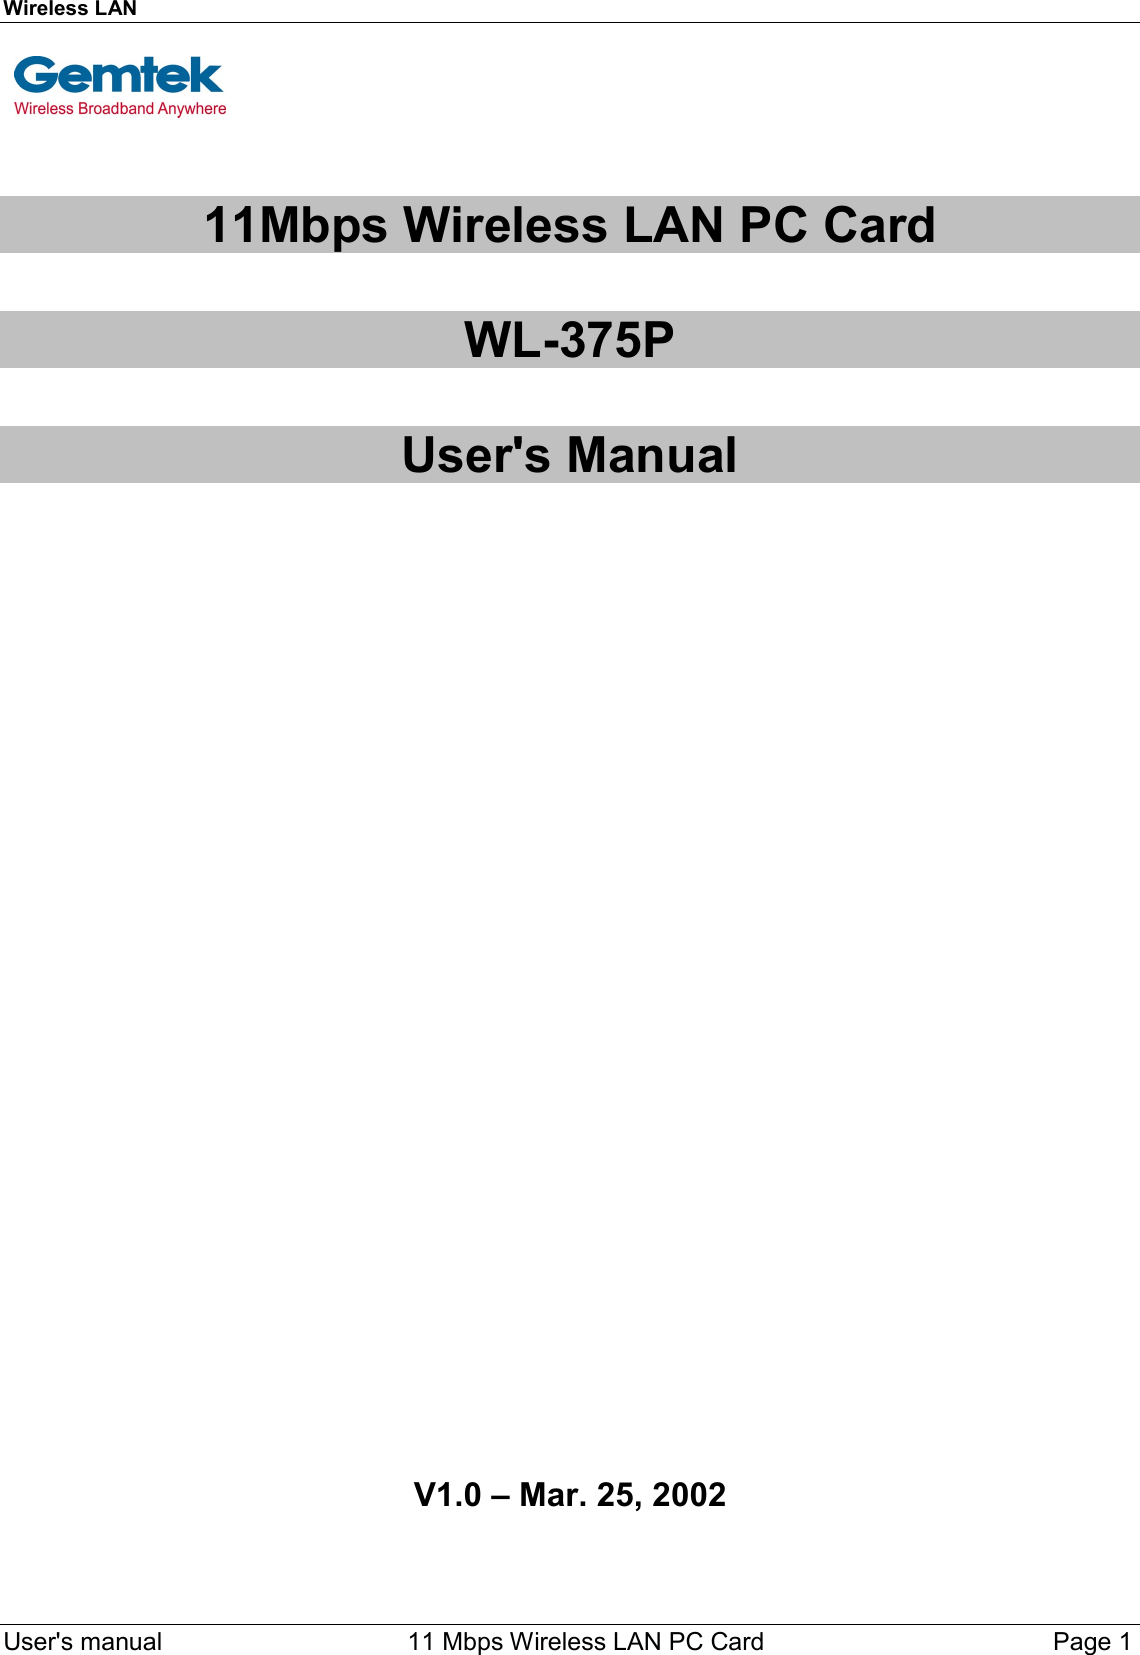 Wireless LAN  User&apos;s manual    11 Mbps Wireless LAN PC Card Page 1   11Mbps Wireless LAN PC CardWL-375PUser&apos;s Manual   V1.0 – Mar. 25, 2002